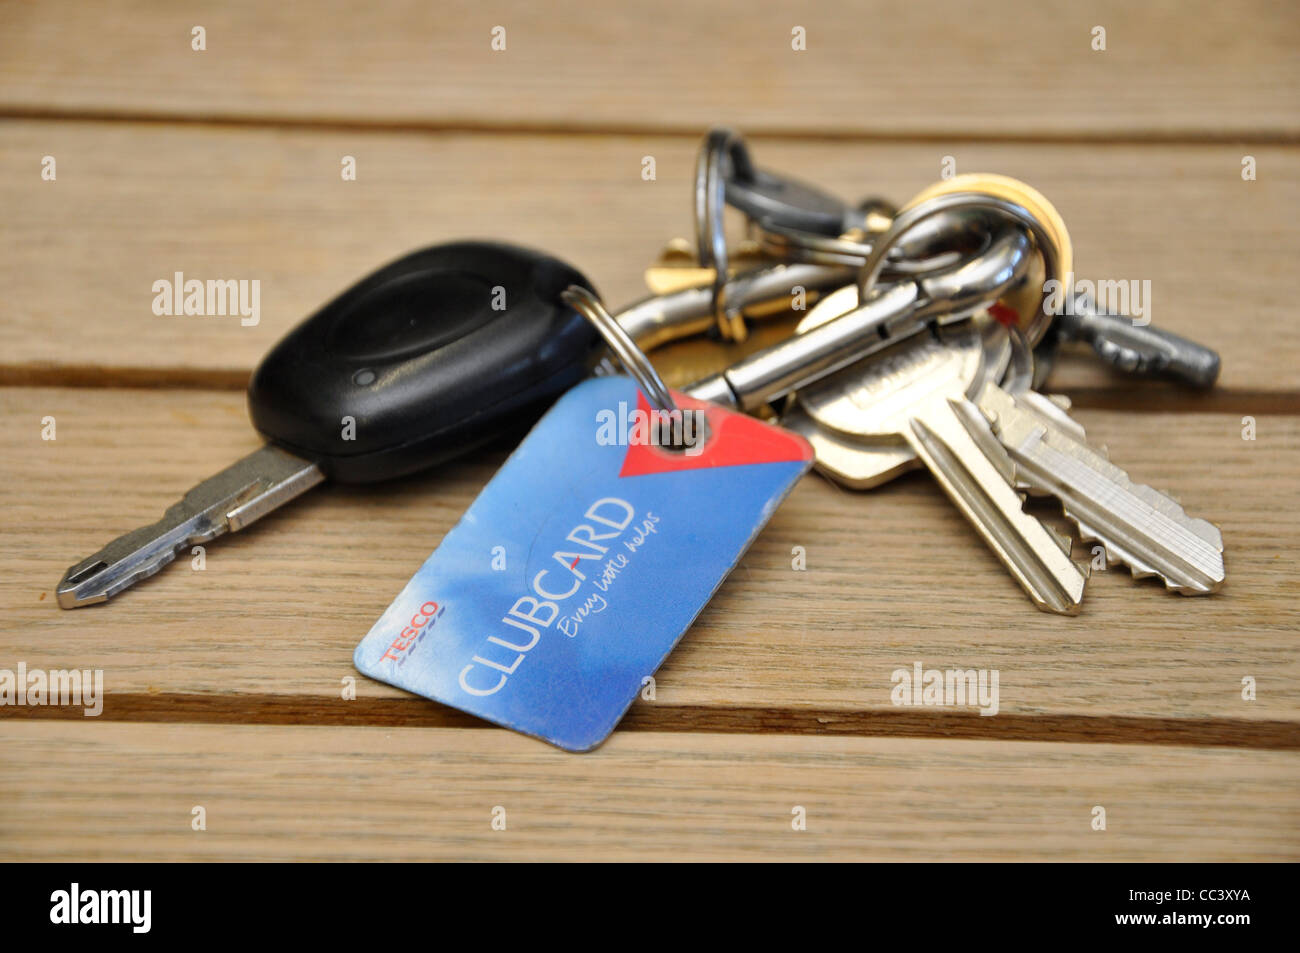 Tesco clubcard on bunch of keys. Stock Photo